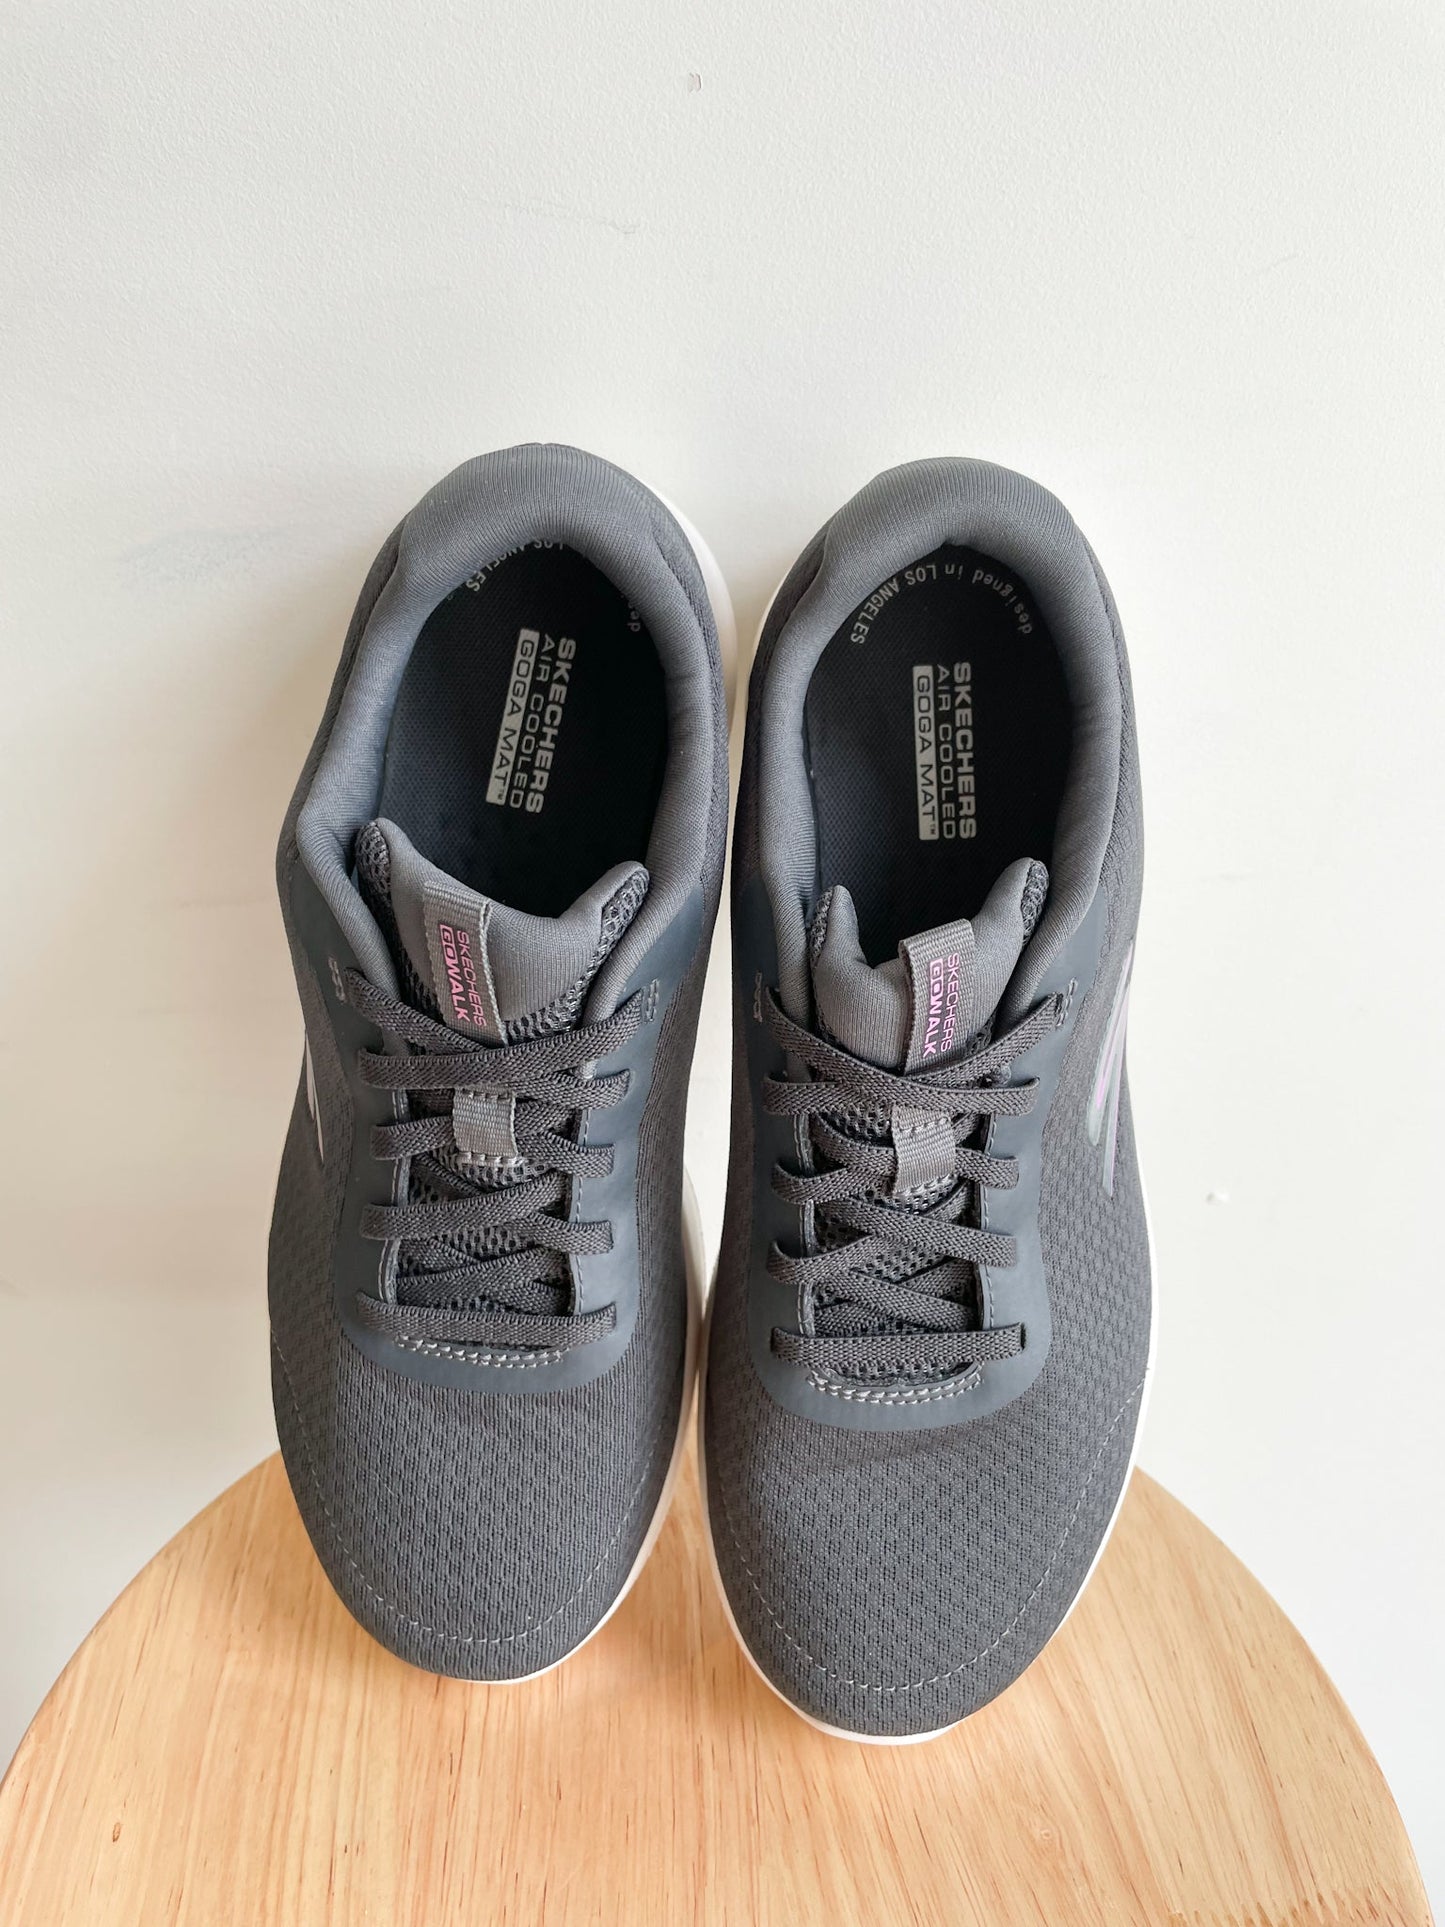 Sketchers Grey GoWalk Running Shoes - Size 8